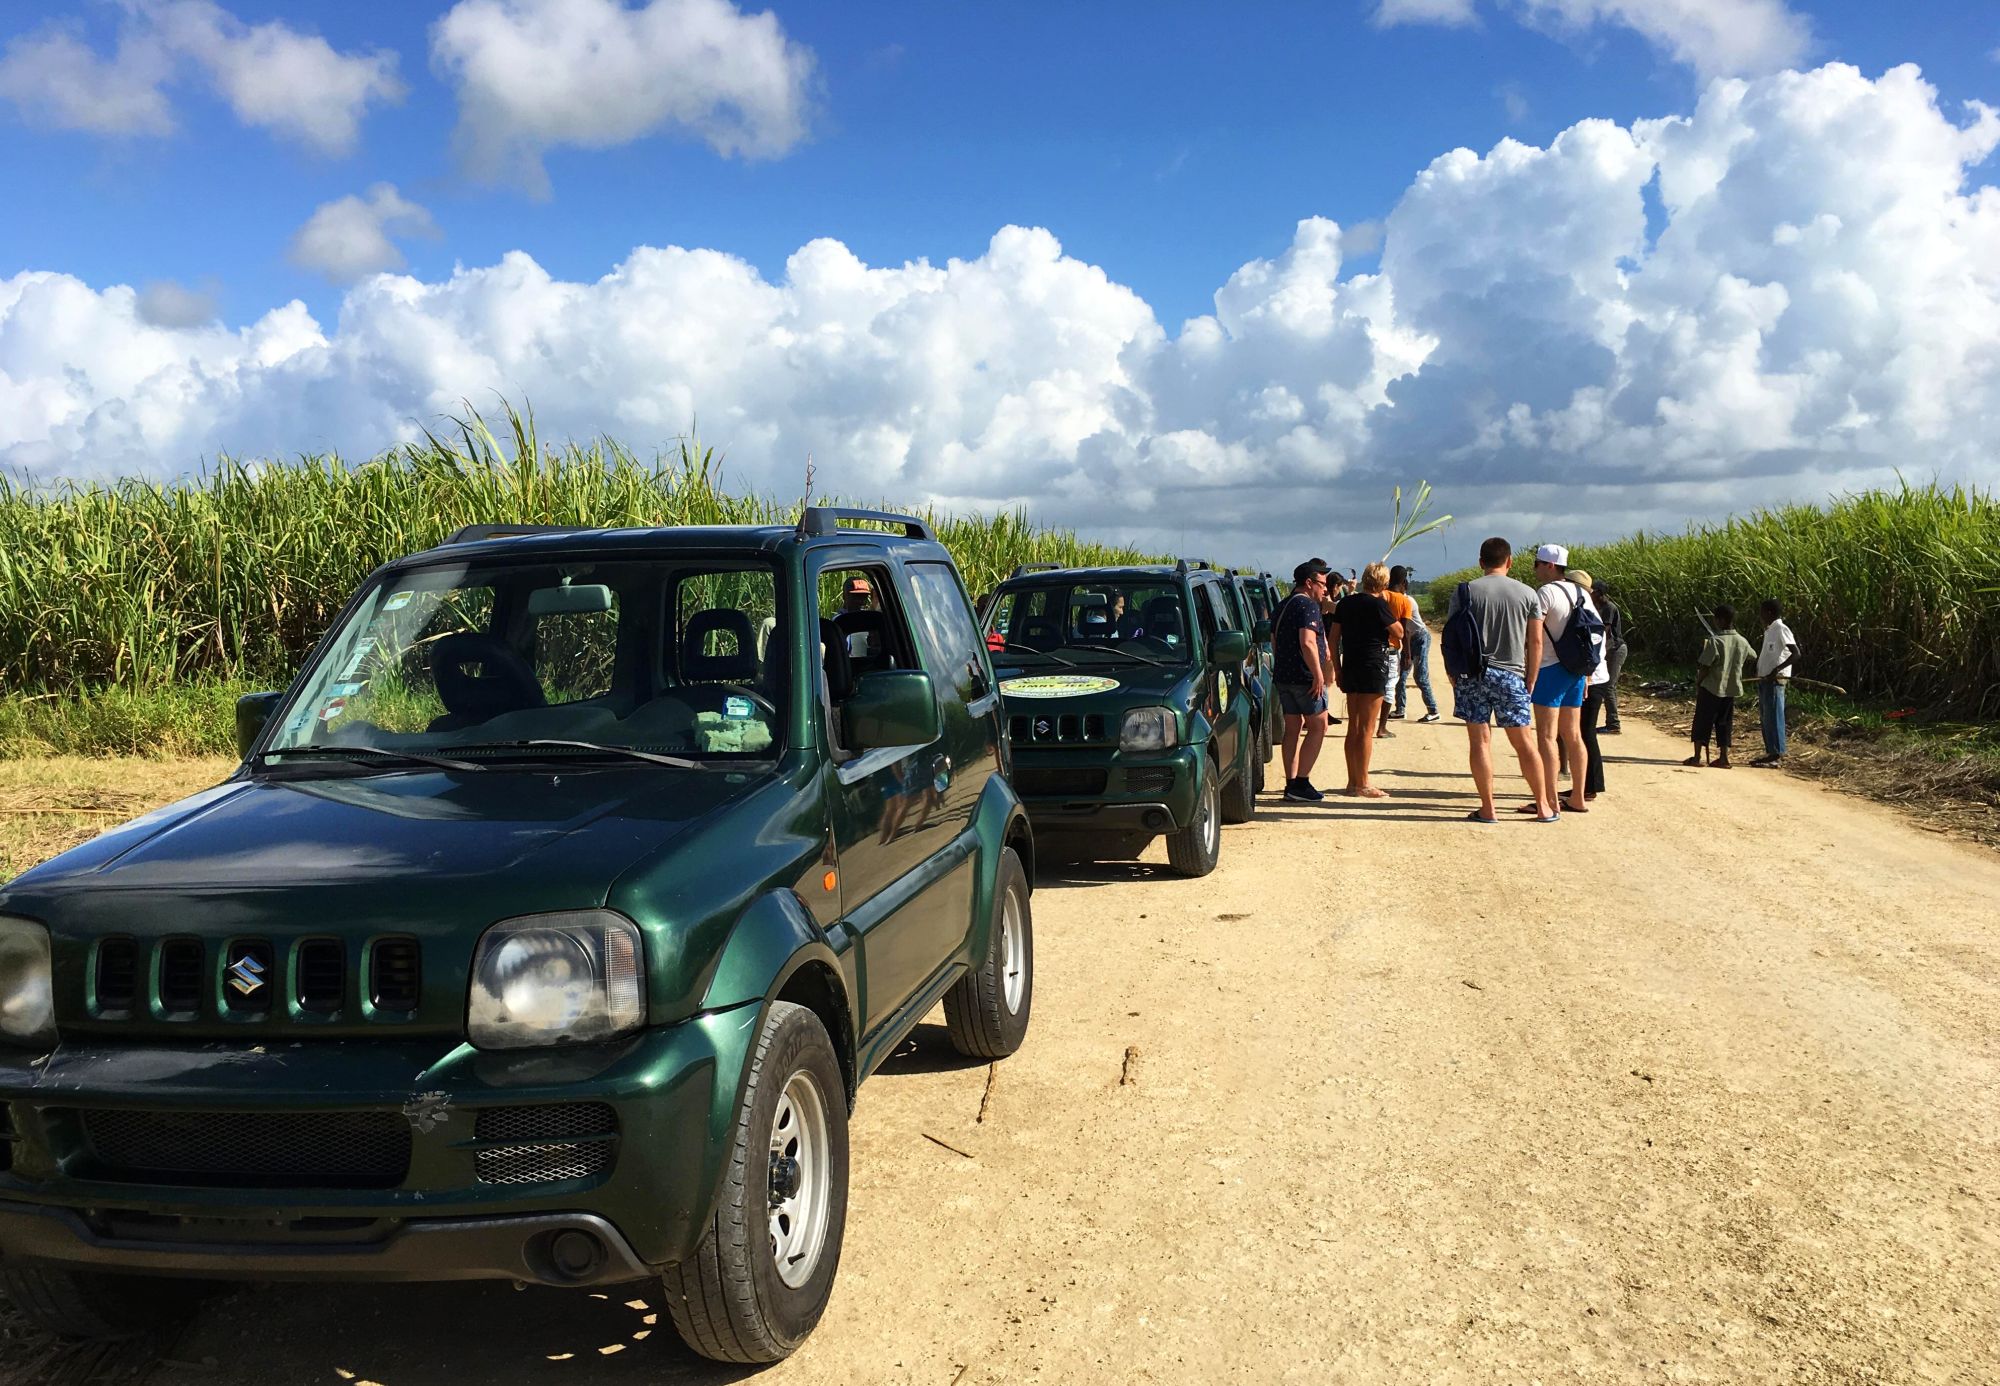 Как проходит экскурсия джип-сафари в Доминикане. Видео